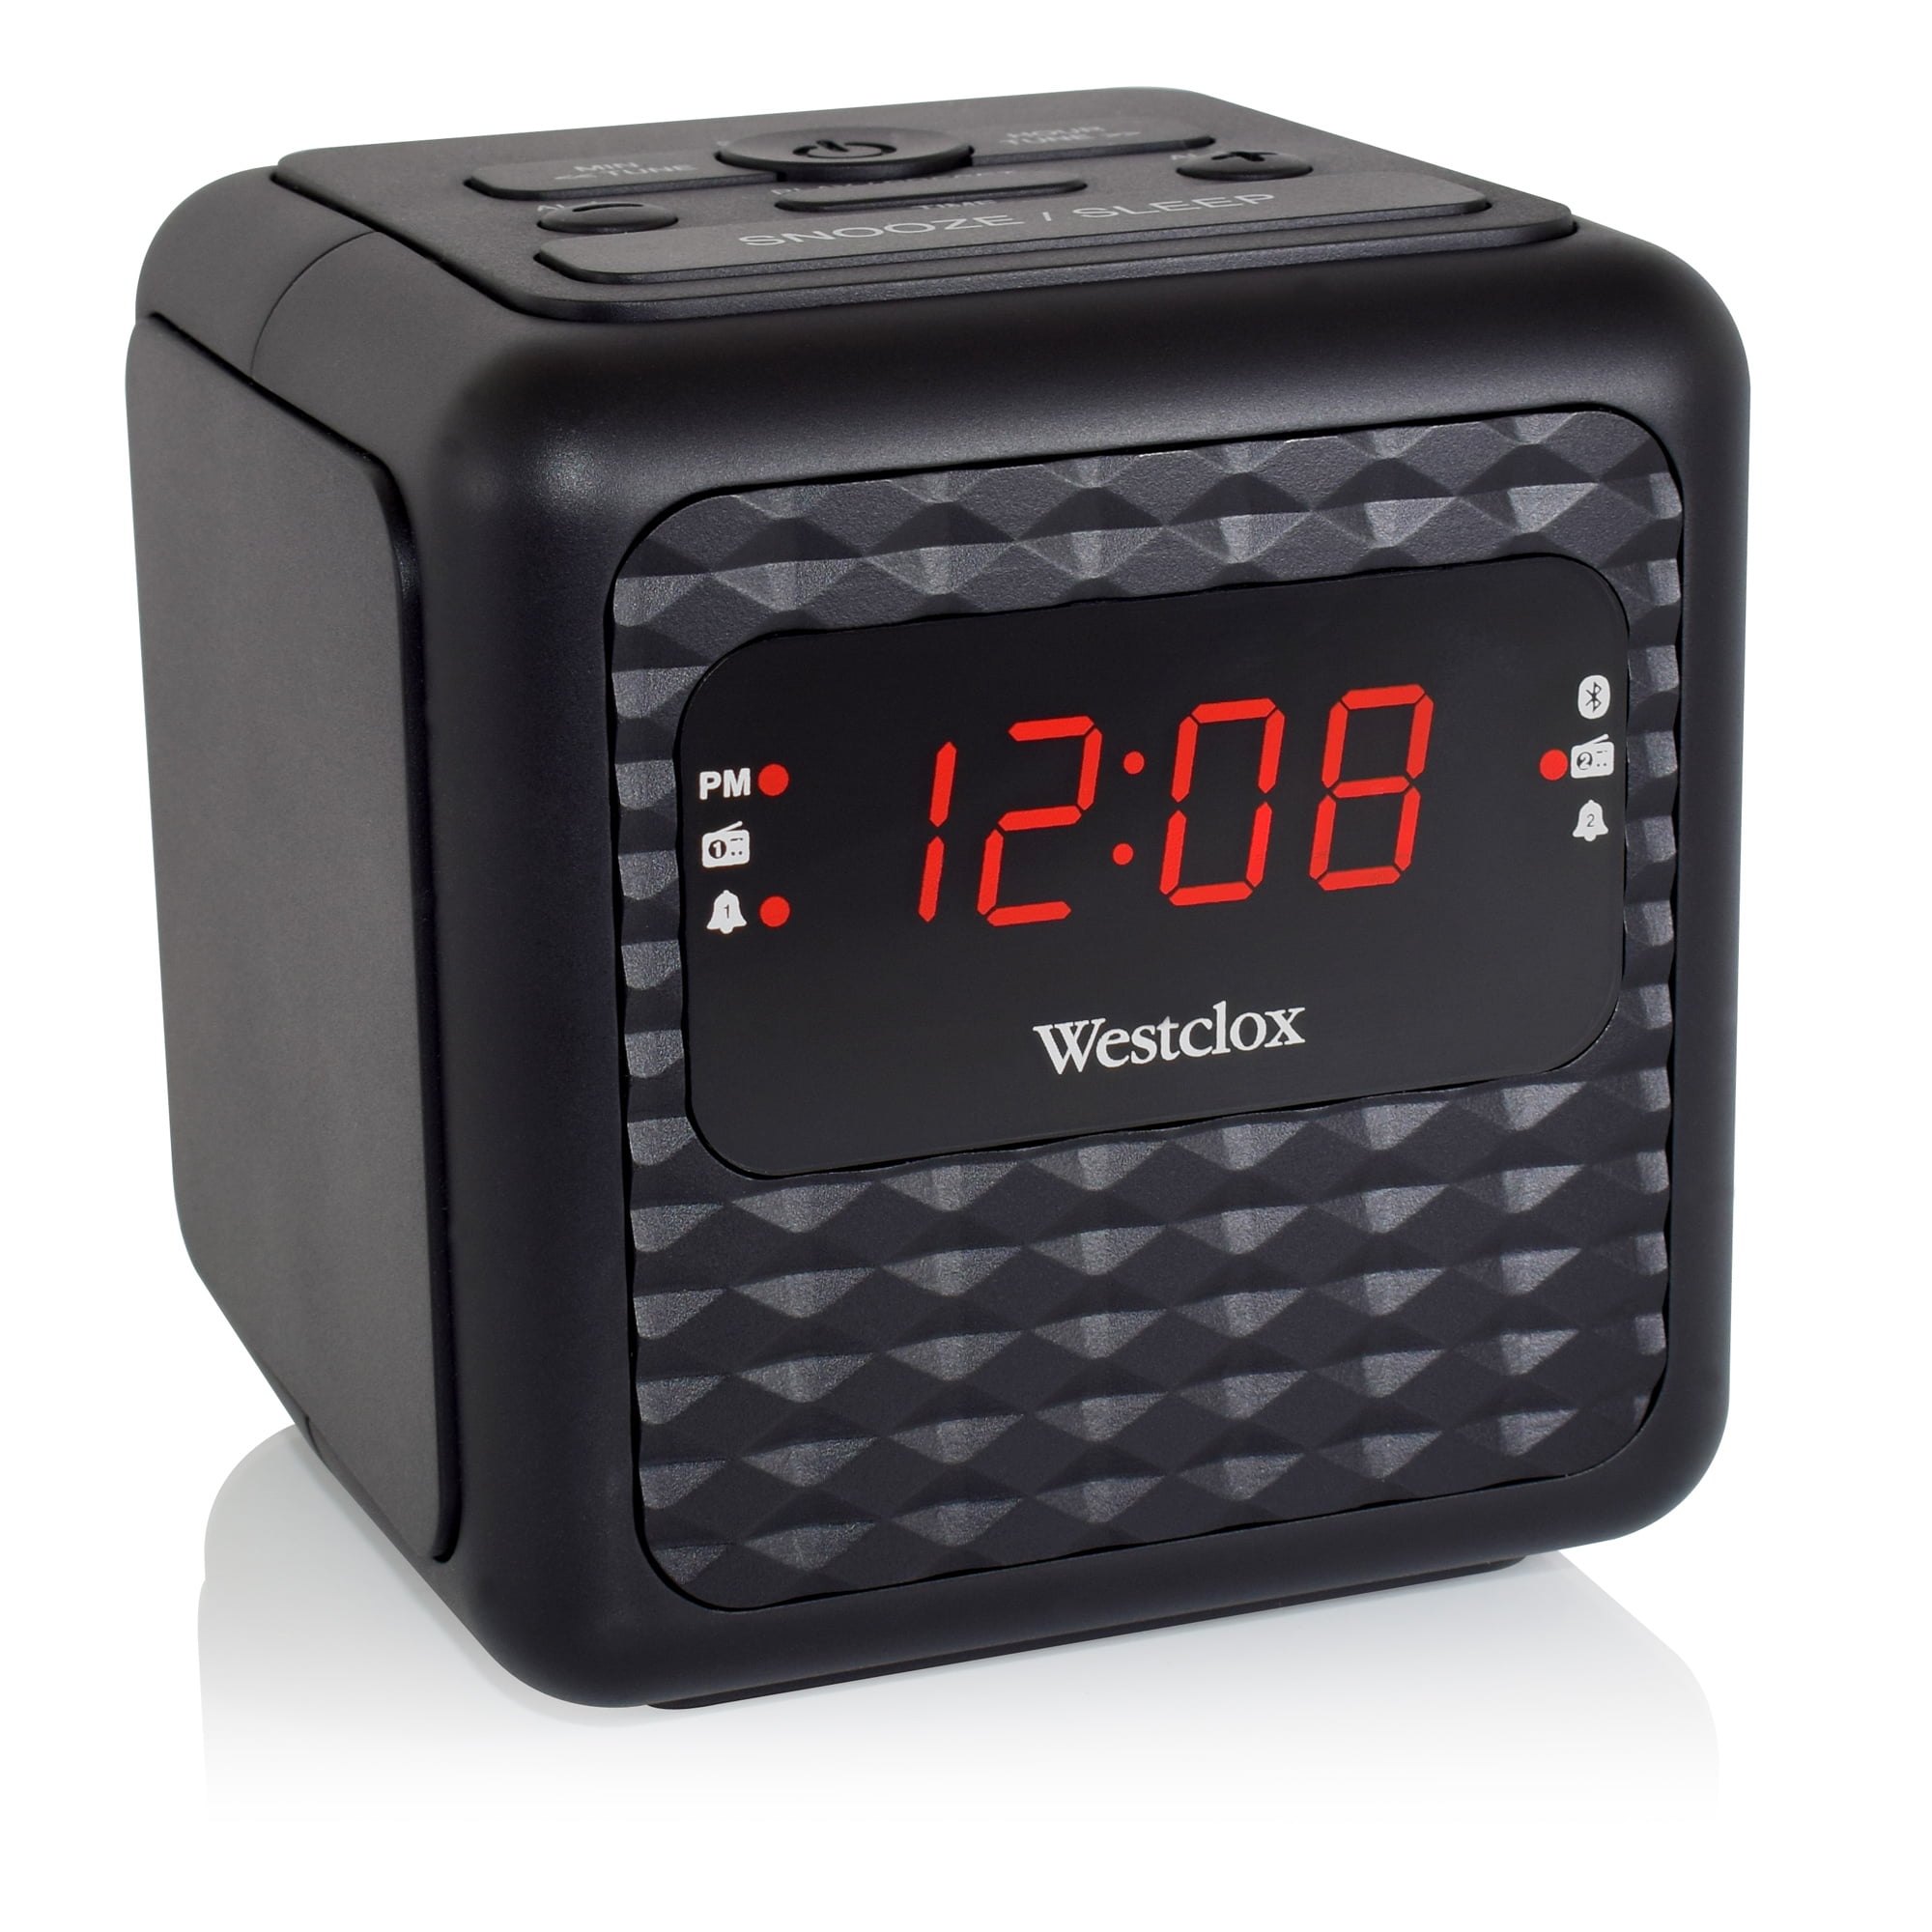 Emerson SmartSet Alarm Clock Radio with Bluetooth Speaker, USB 